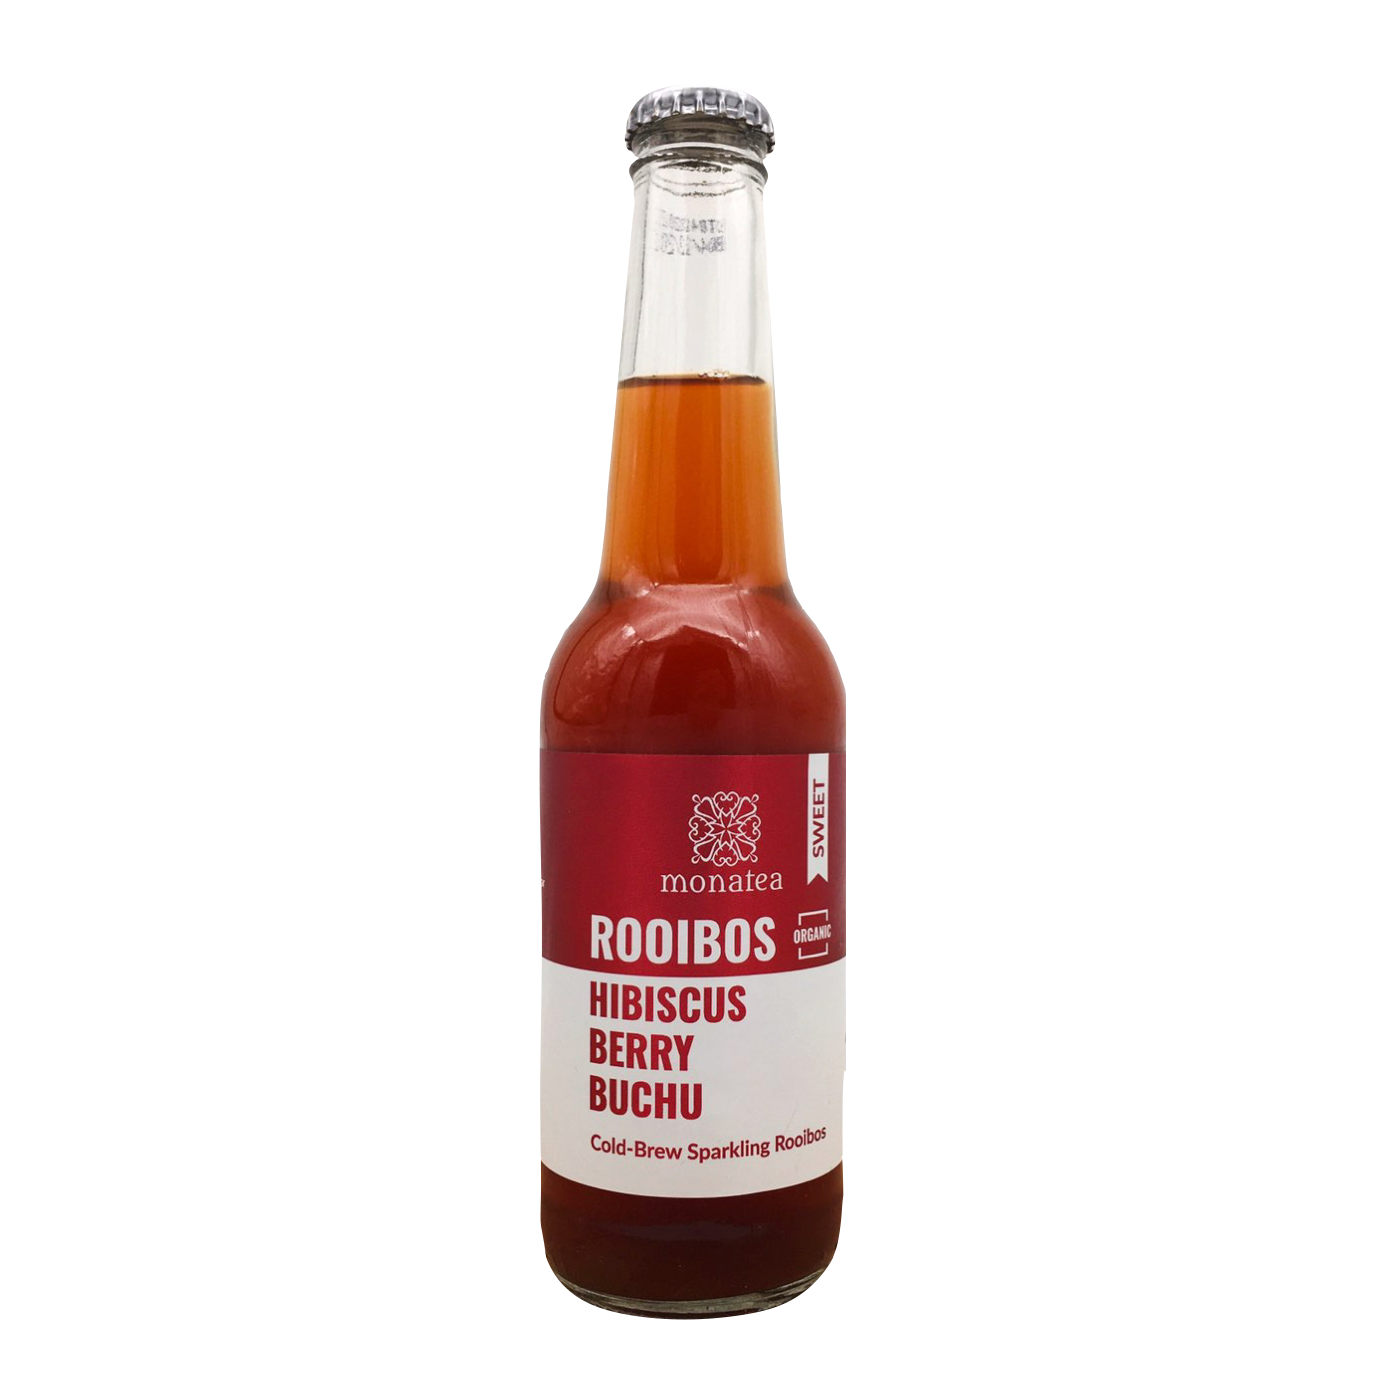 Cold Brew Rooibos - Hibiscus, Berry & Buchu 330ml